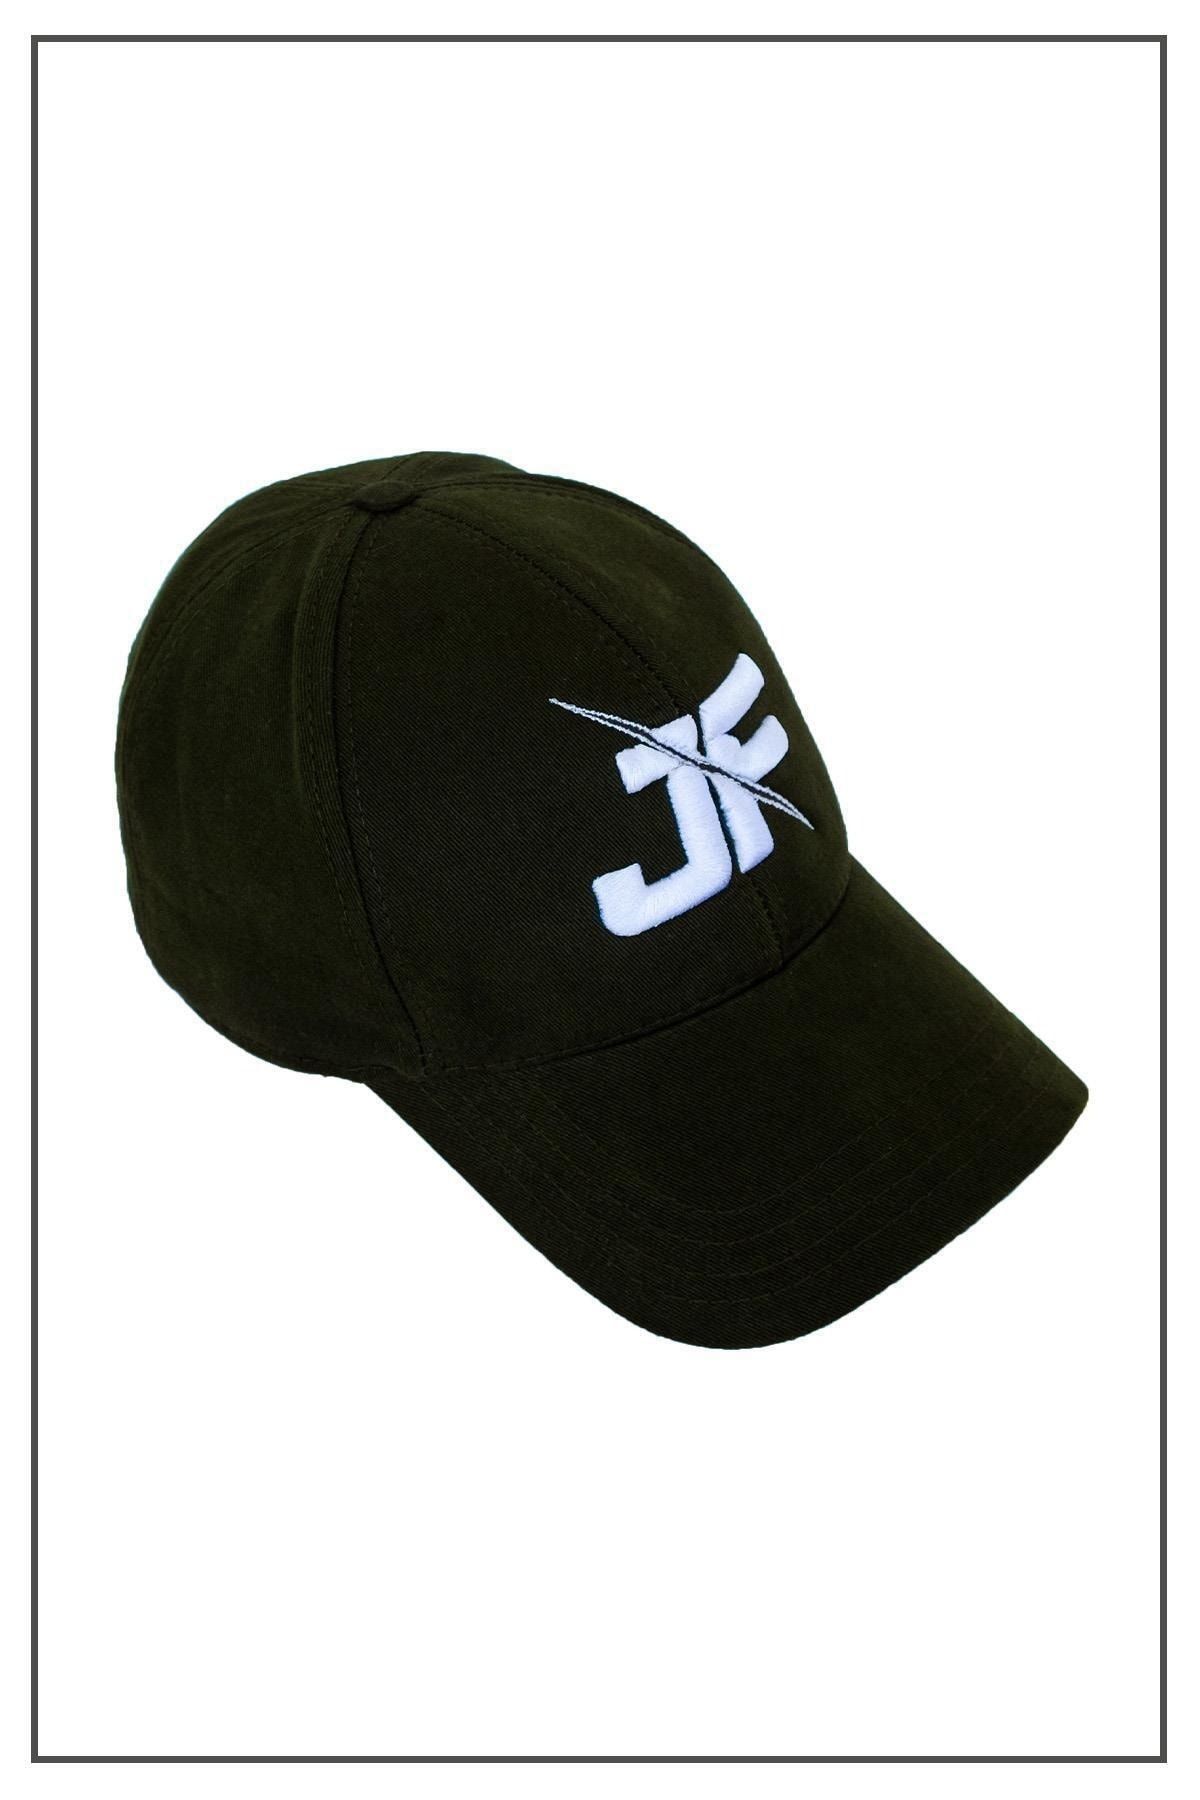 jofit Premium Sports Şapka Haki-Beyaz